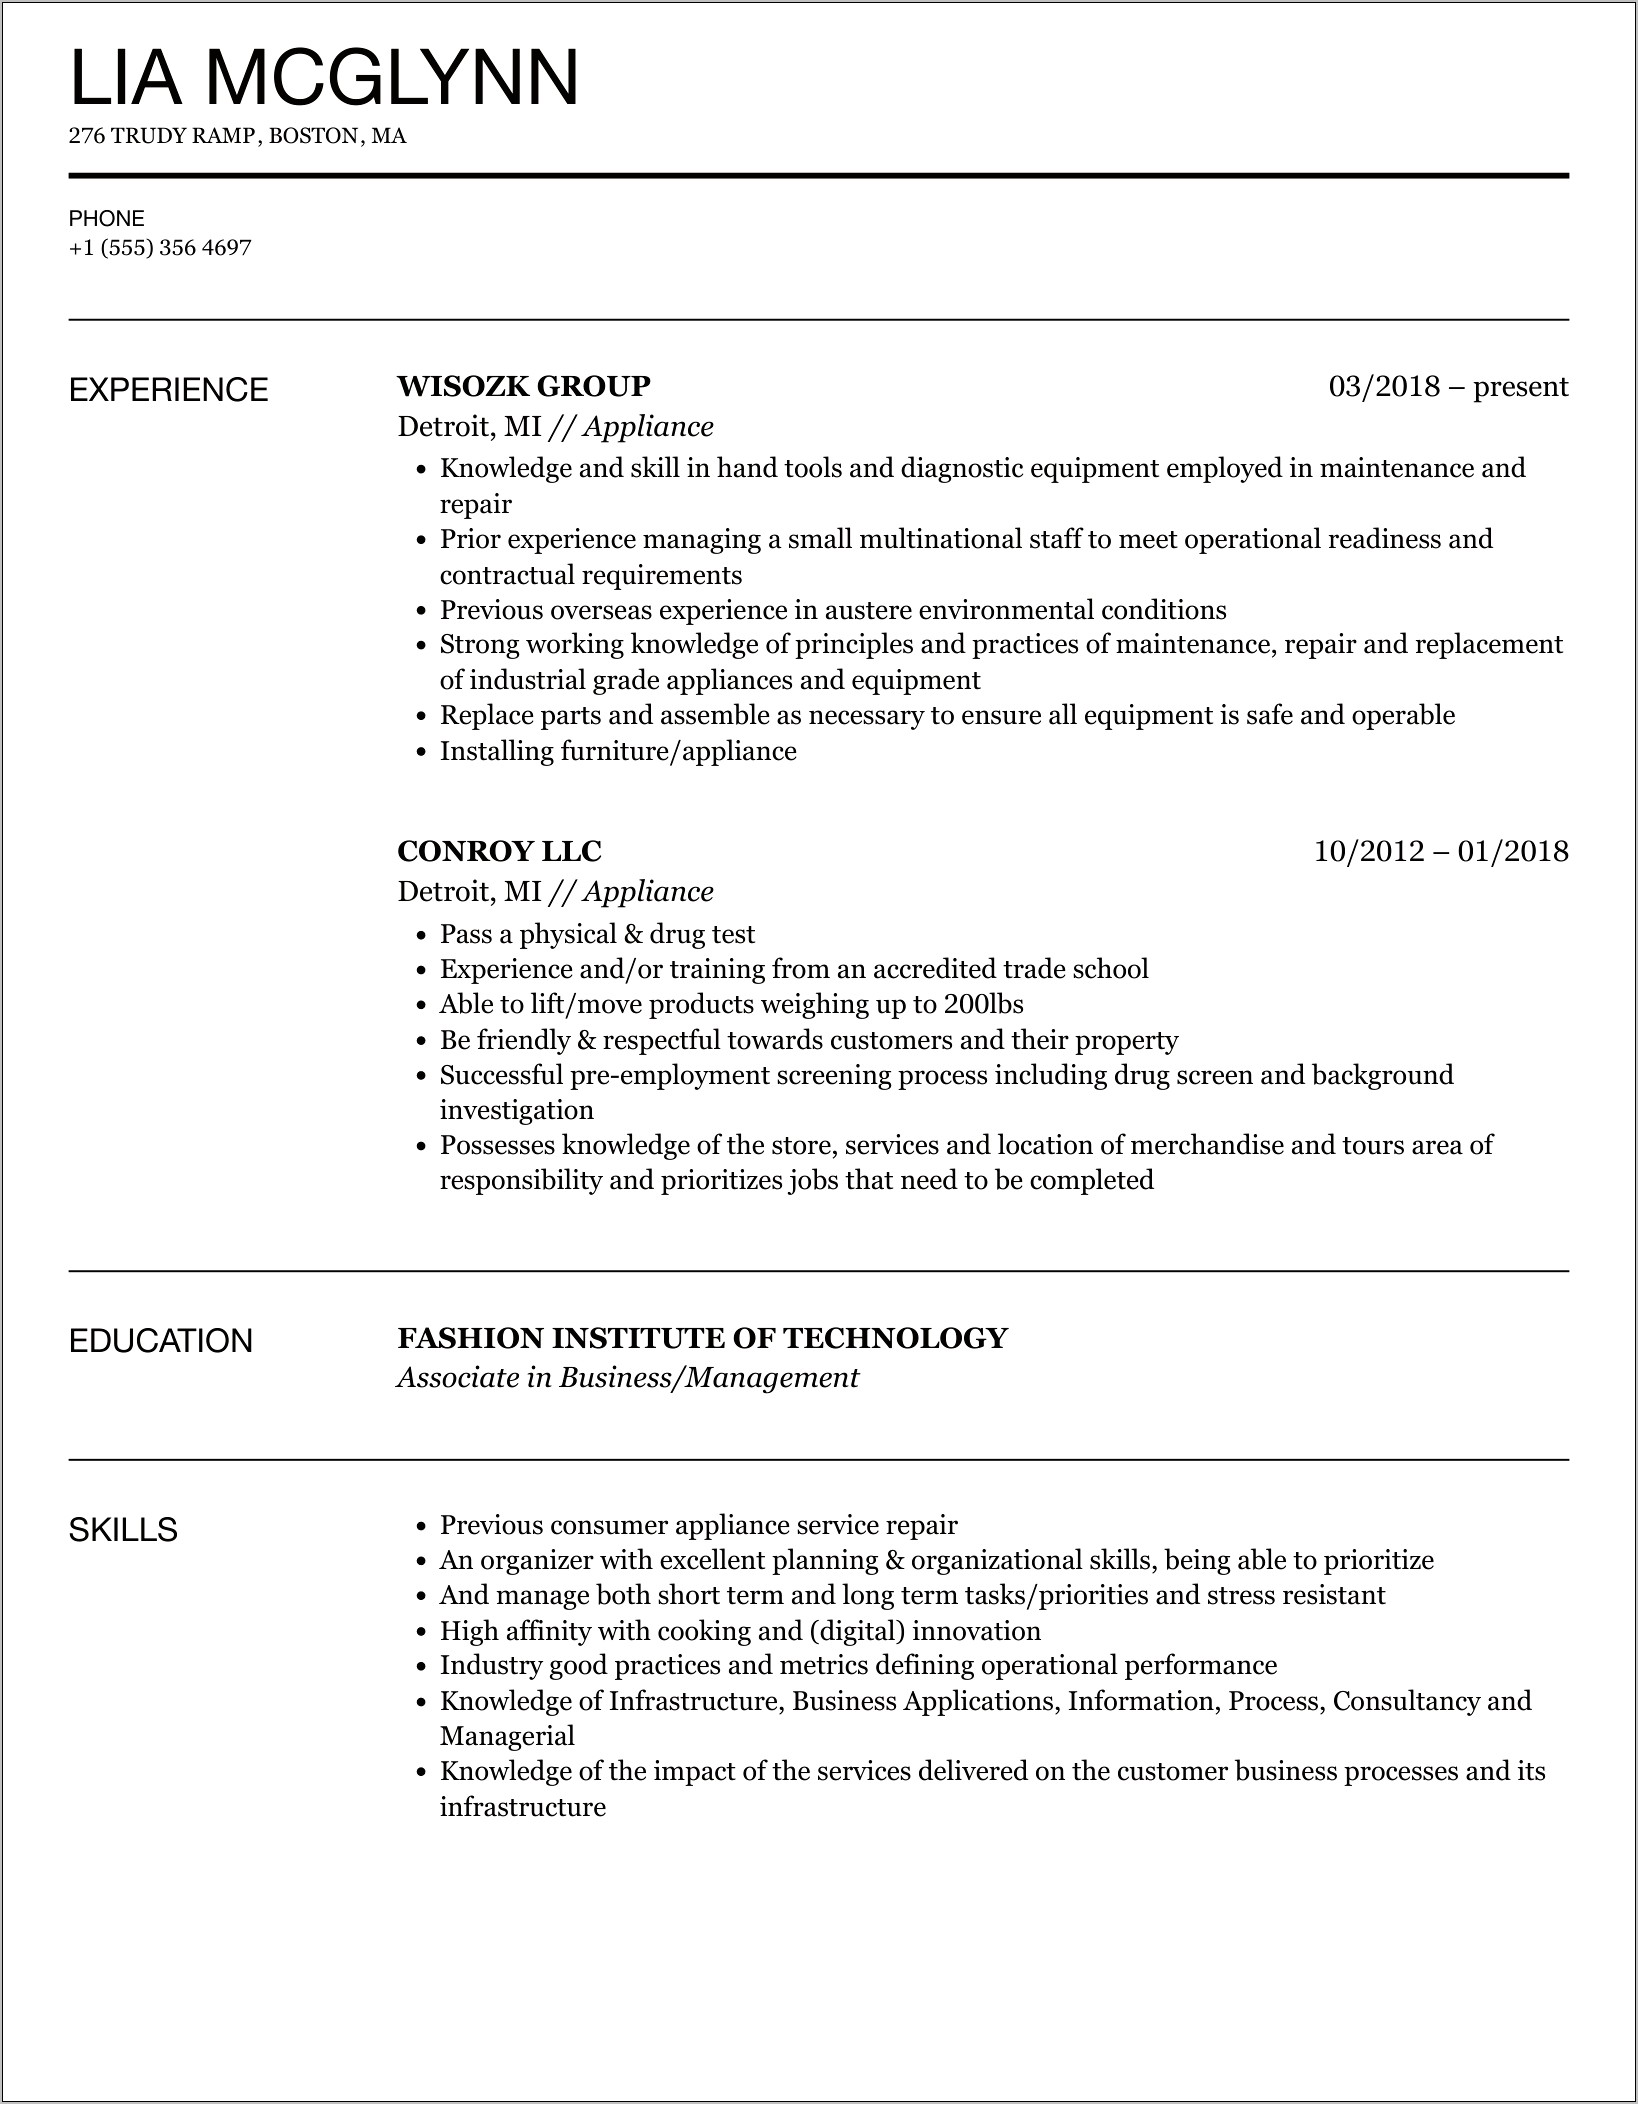 Sample Resume For Appliance Technician